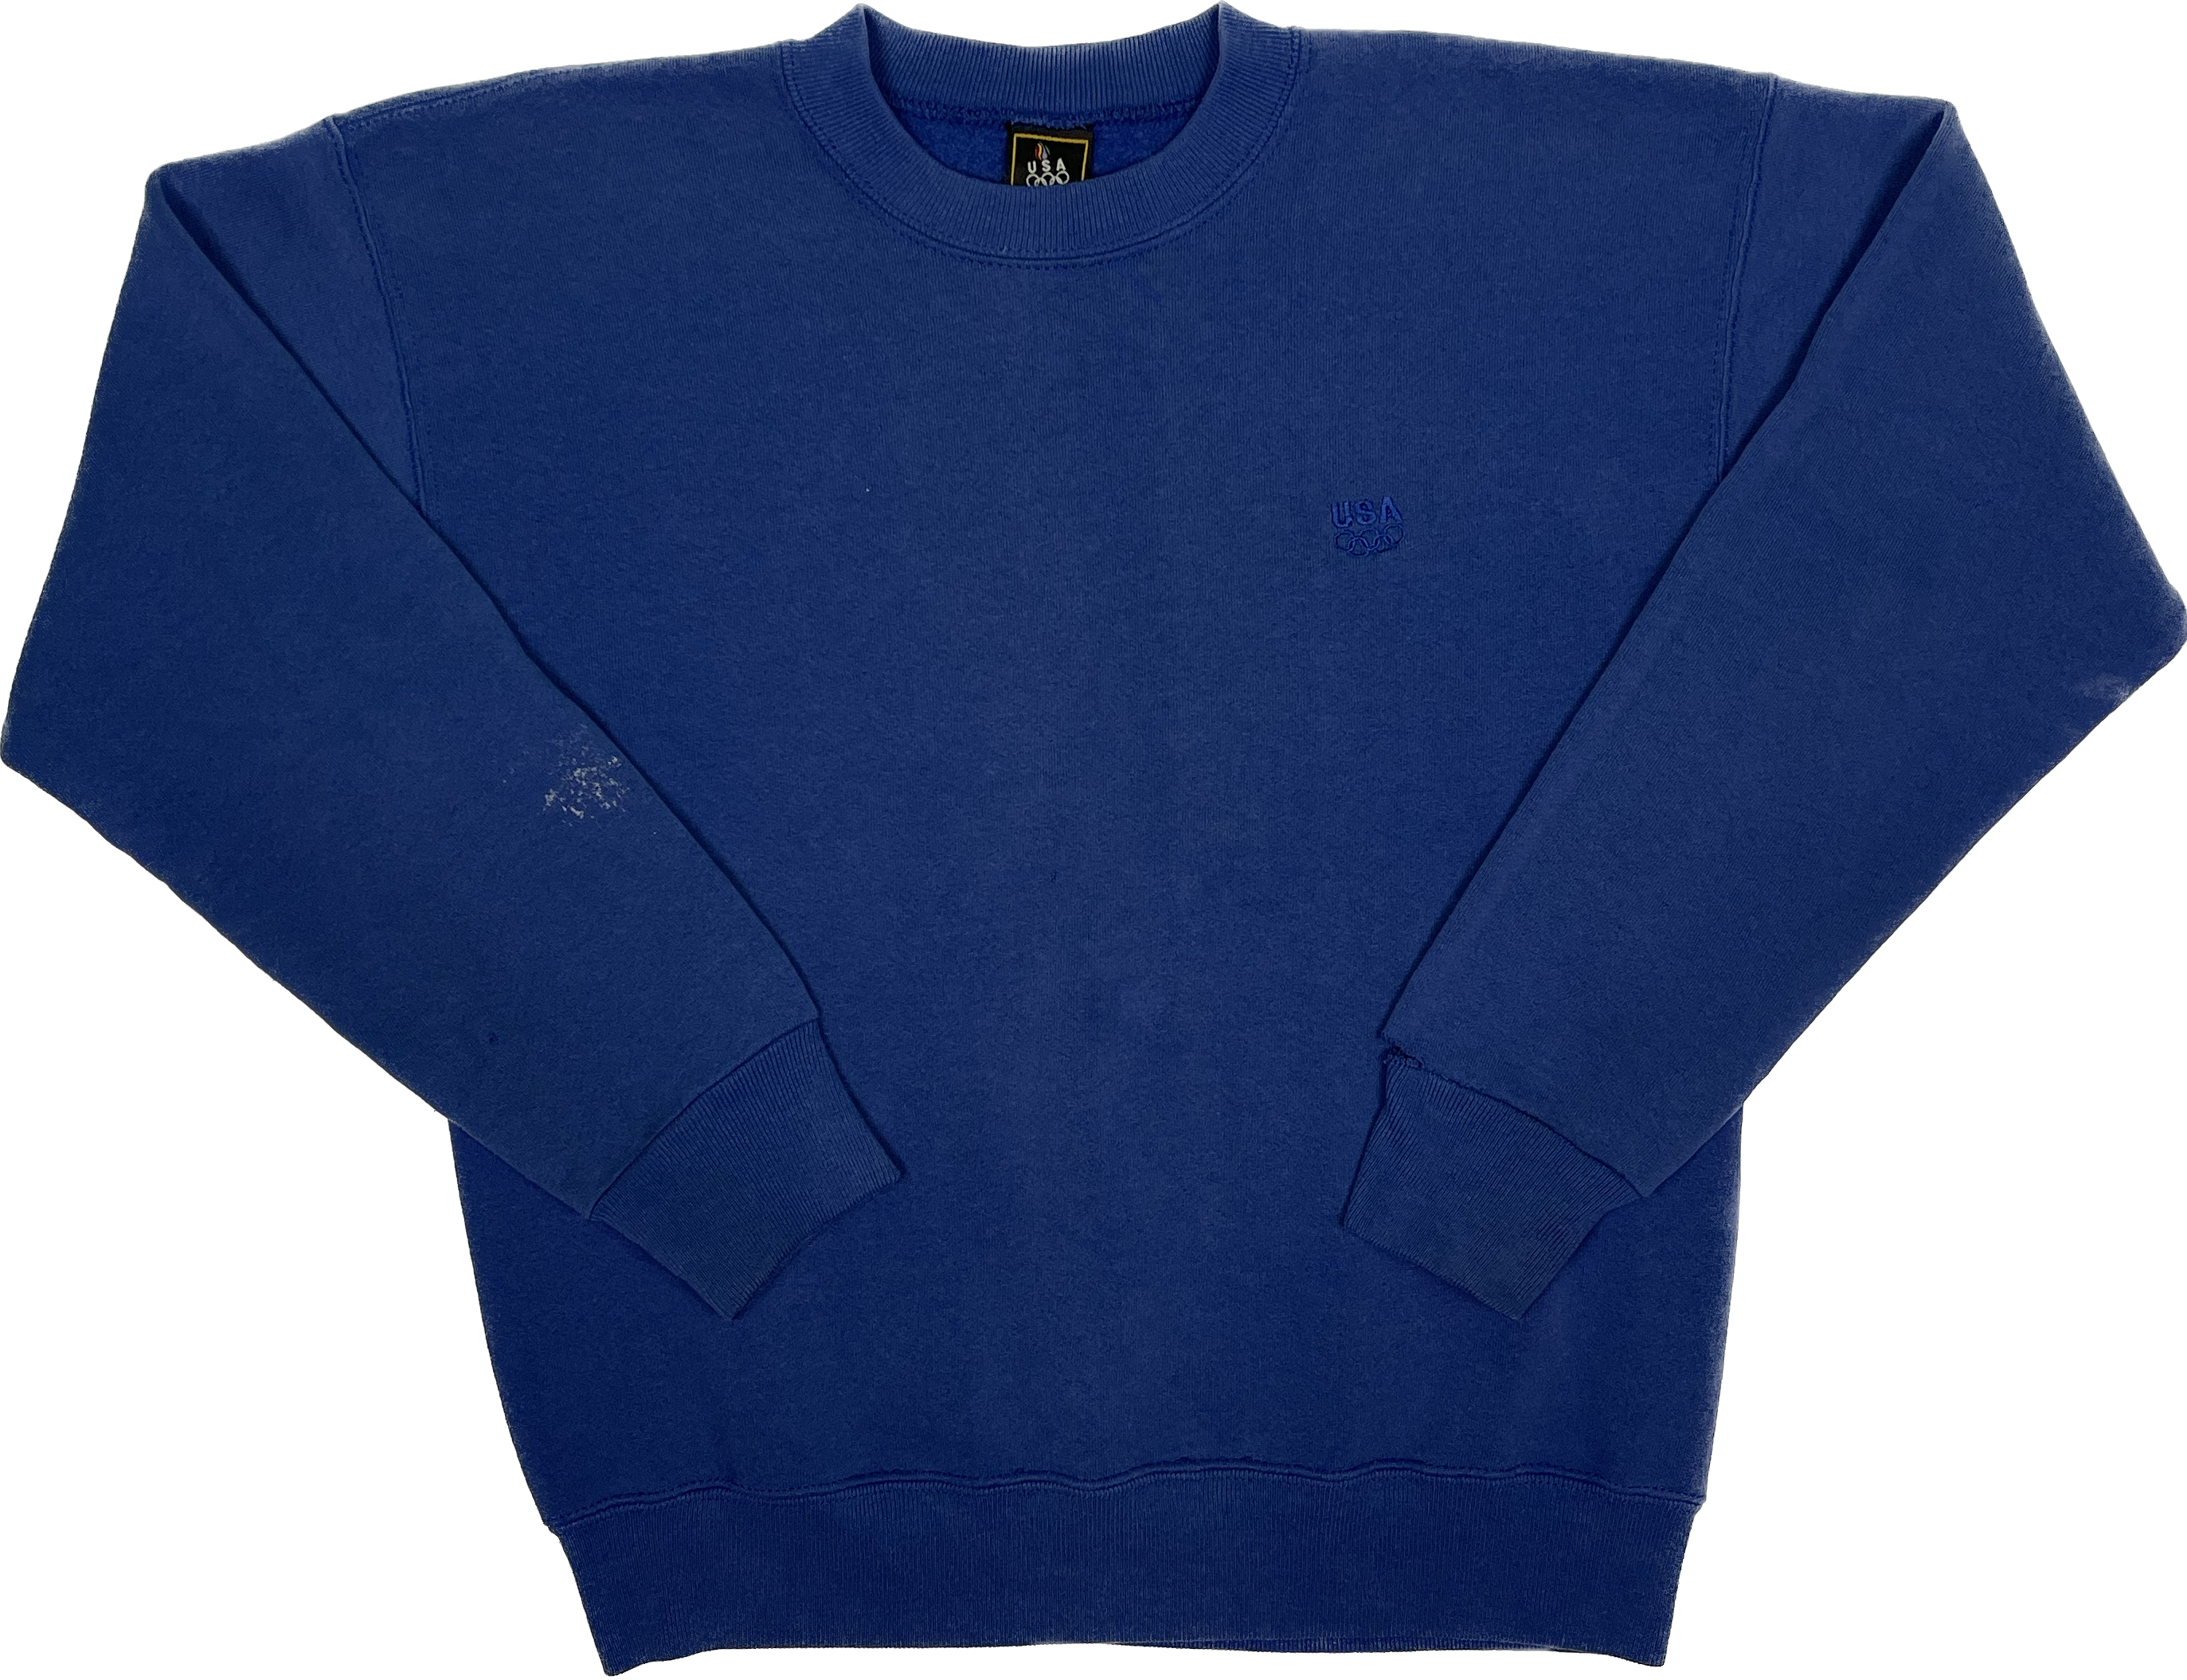 USA Olympic Games Vintage Sweatshirt